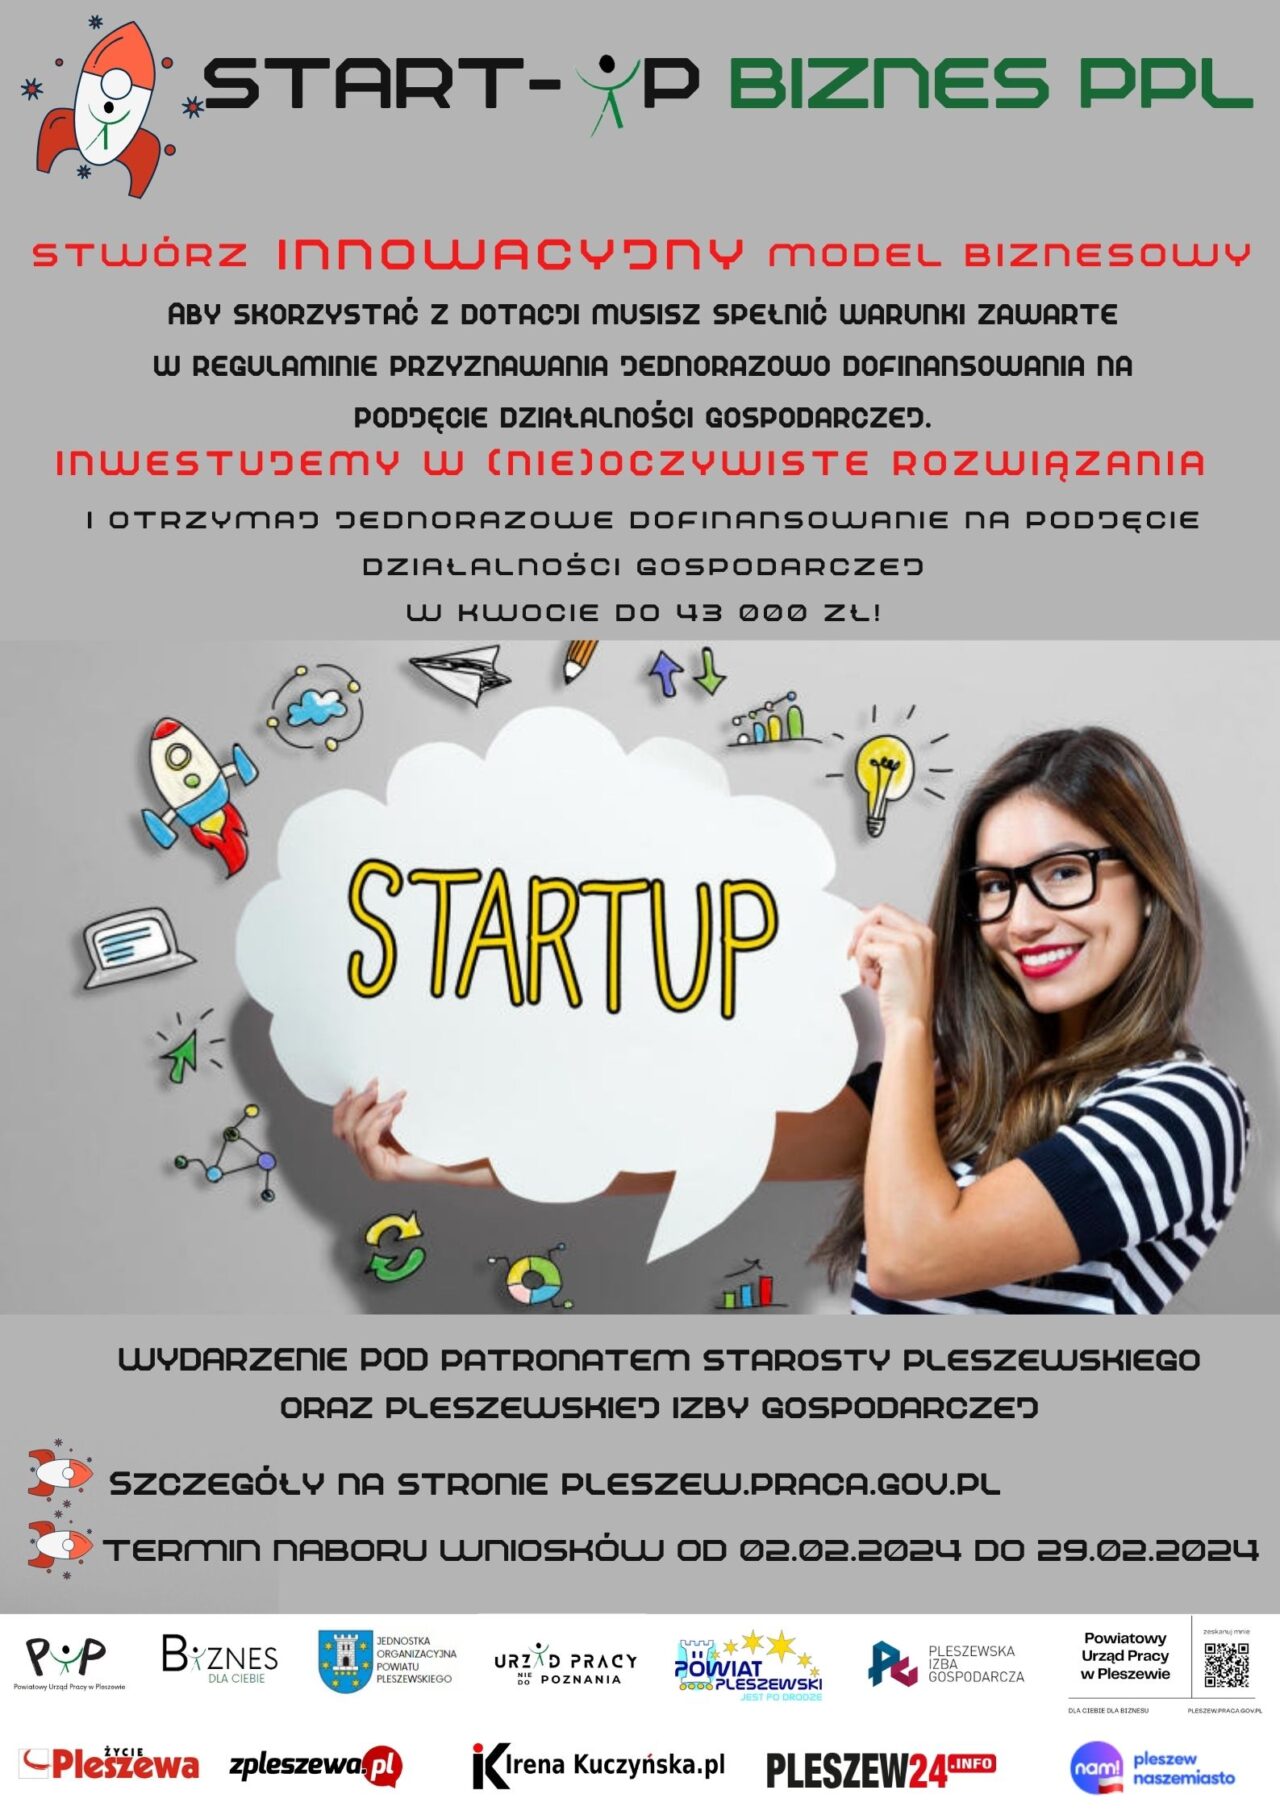 Start-Up-Biznes-PLL-wersja-ostateczna-1280x1811.jpg